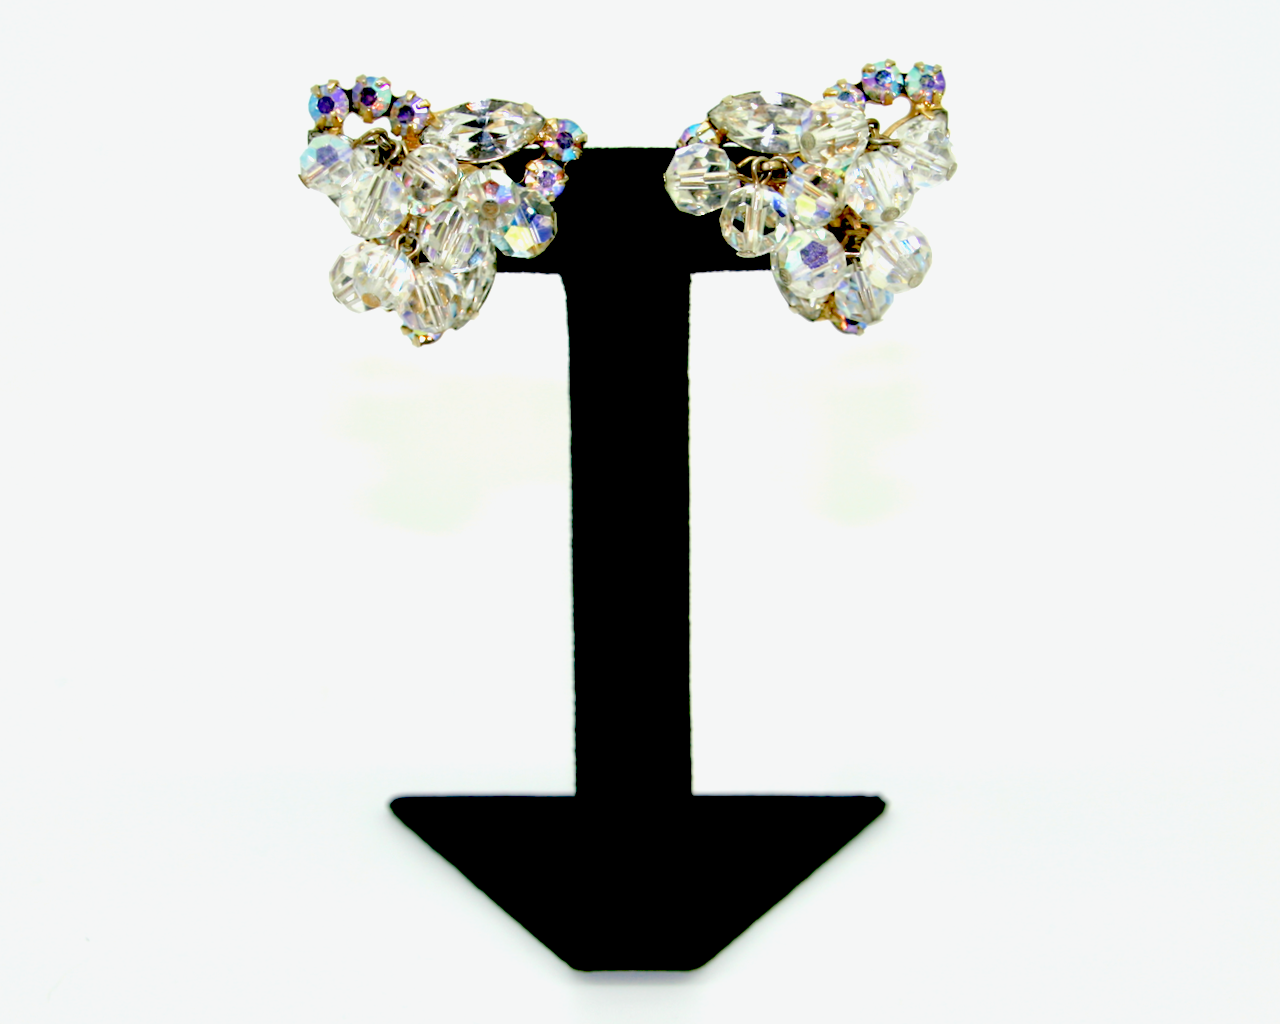 1960's JULIANA dangling crystals earrings